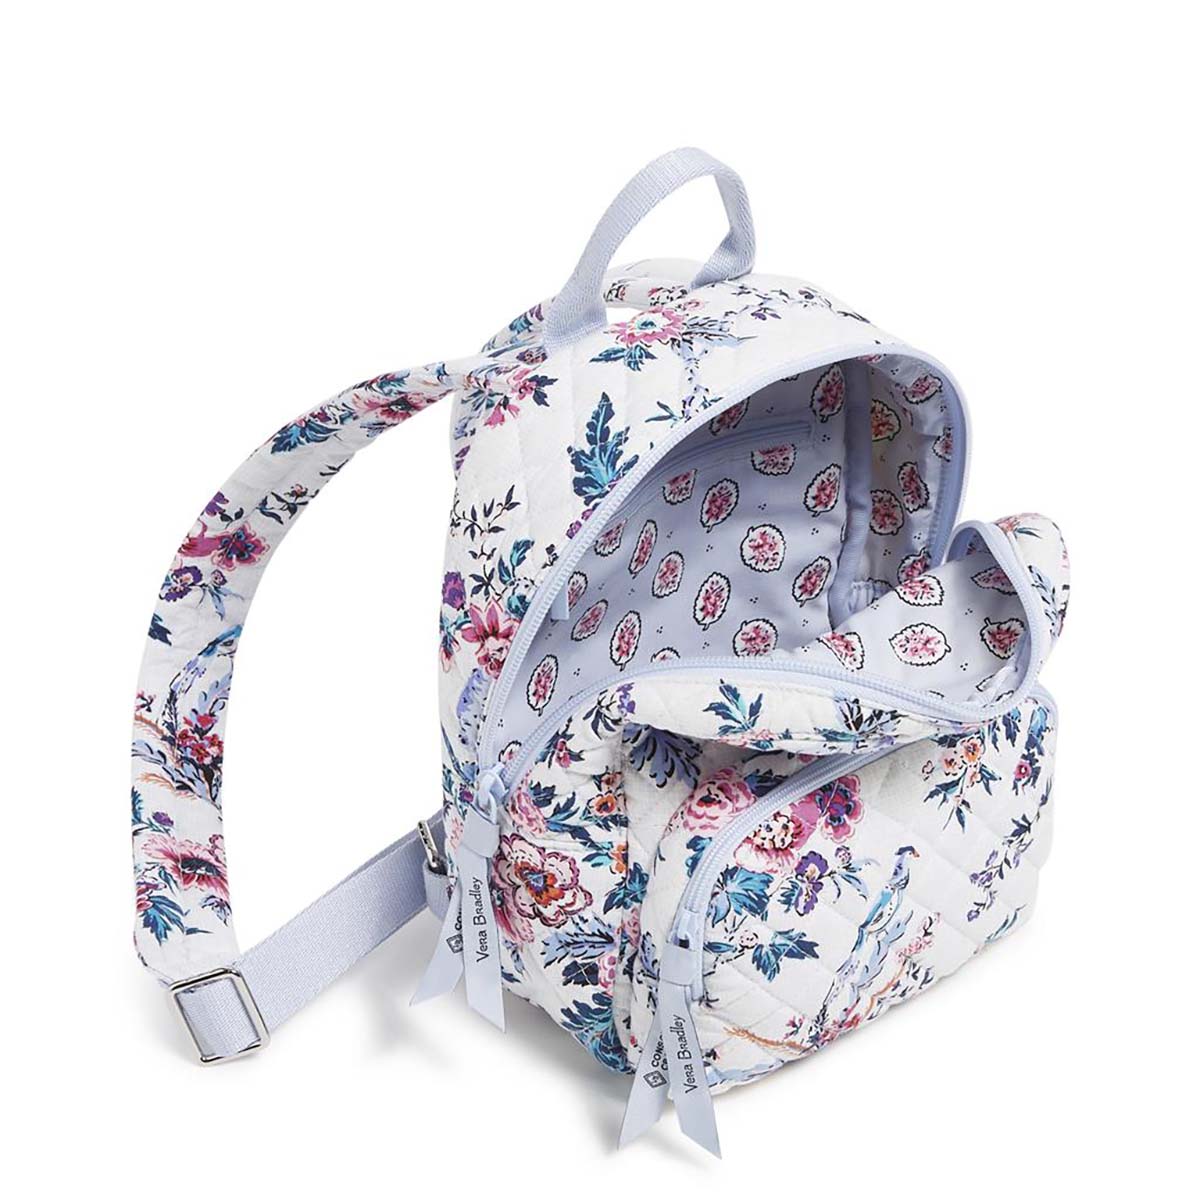 Vera Bradley Mini Backpack - Magnifique Floral